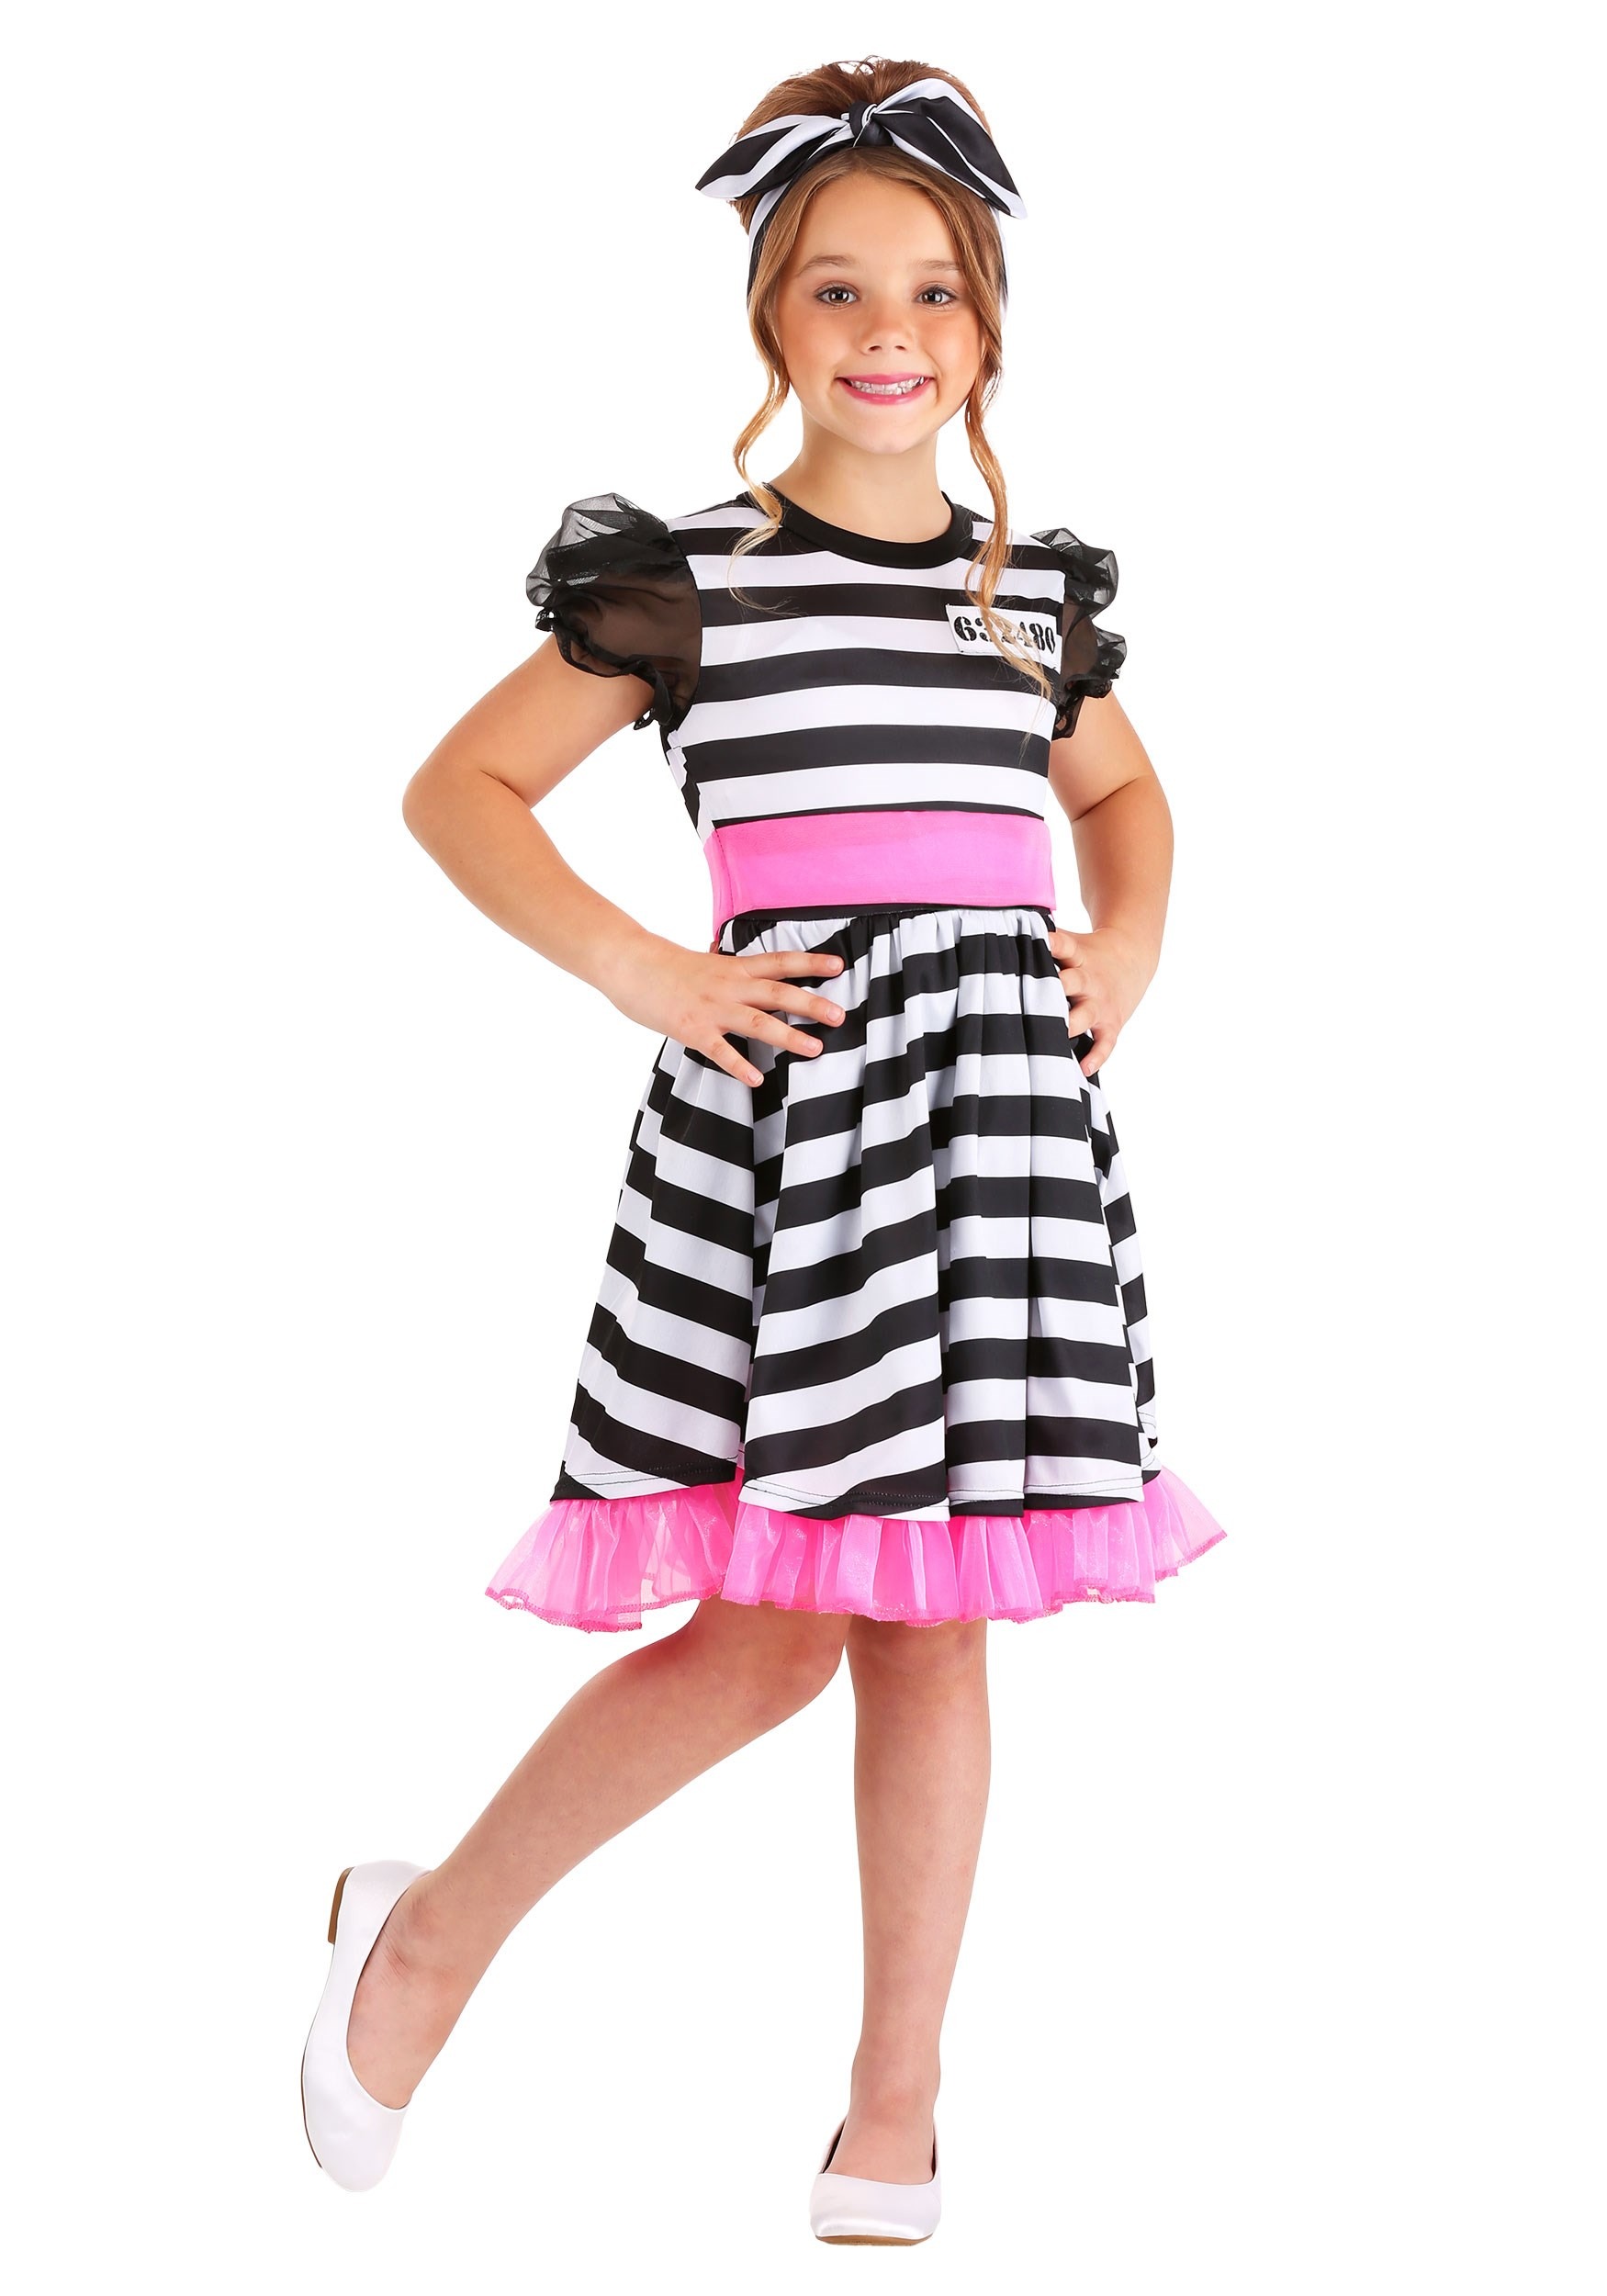 Photos - Fancy Dress FUN Costumes Exclusive Girl's Glam Prisoner Costume Black/Pink/Whi